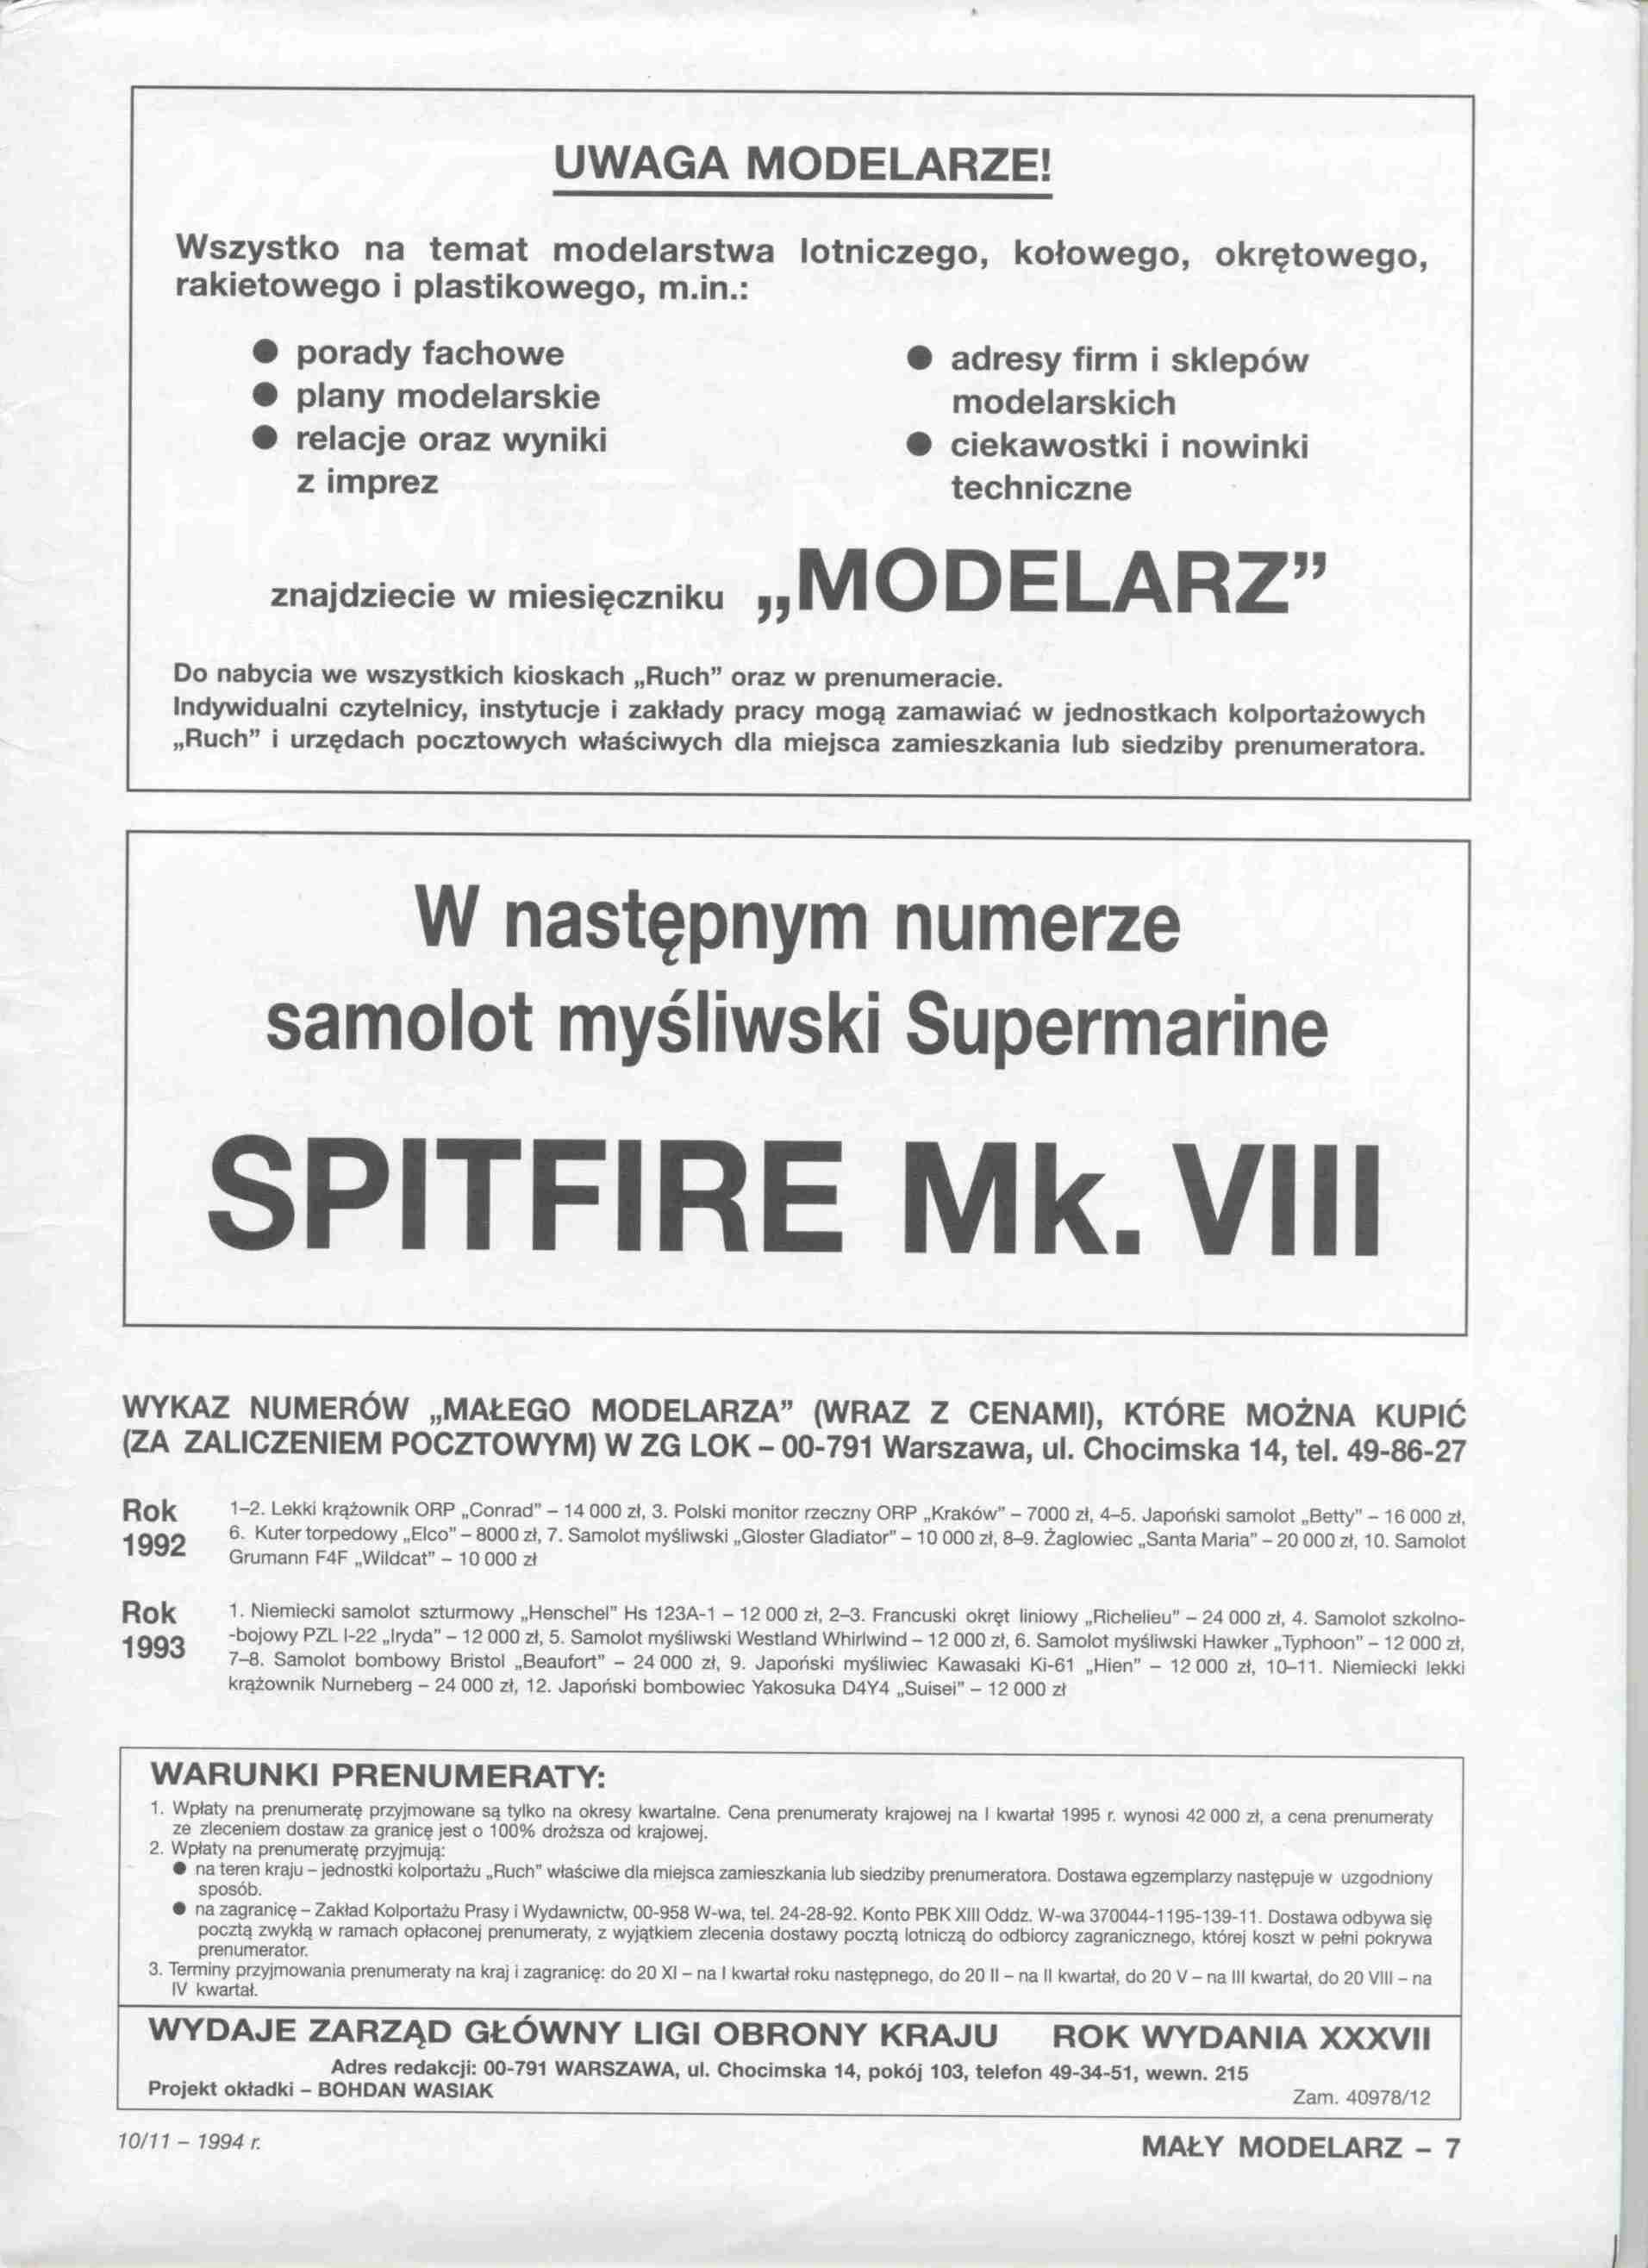 "Maly Modelarz" 10-11, 1994 7 с.